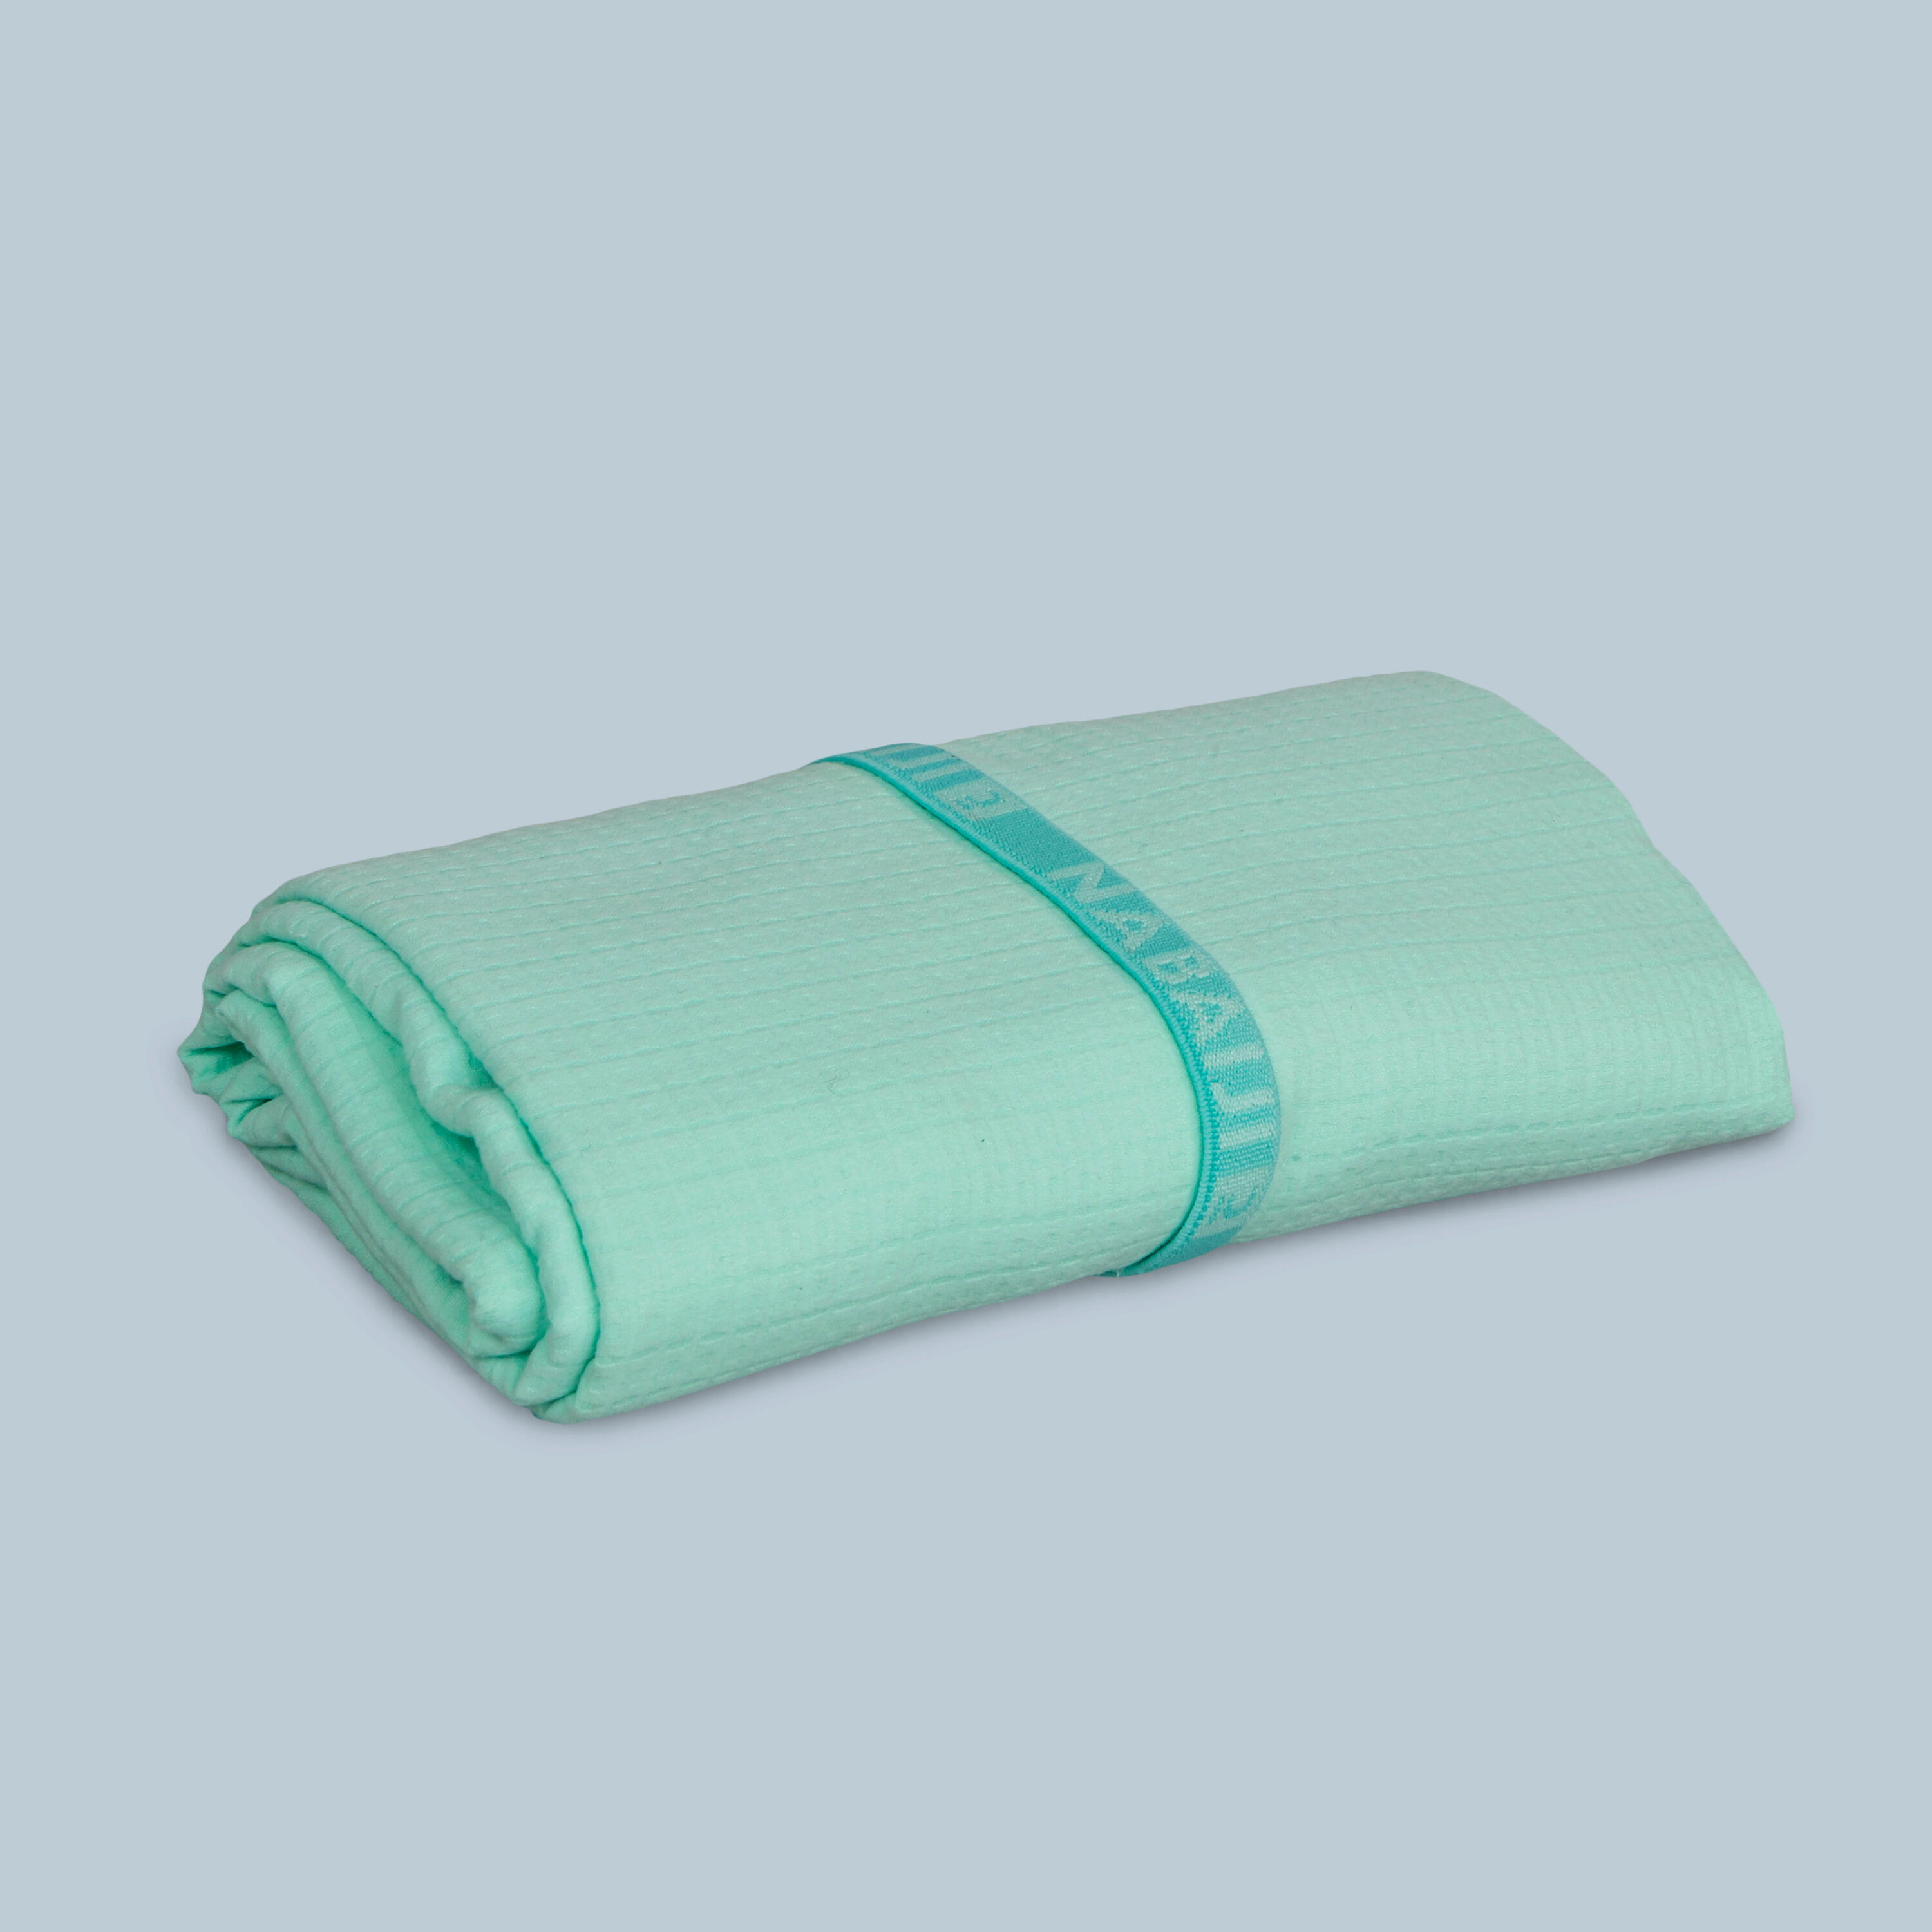 Microfibre Towel Ultra Lightweight Size XL 110 X 175 Cm - Green Mint 4/5